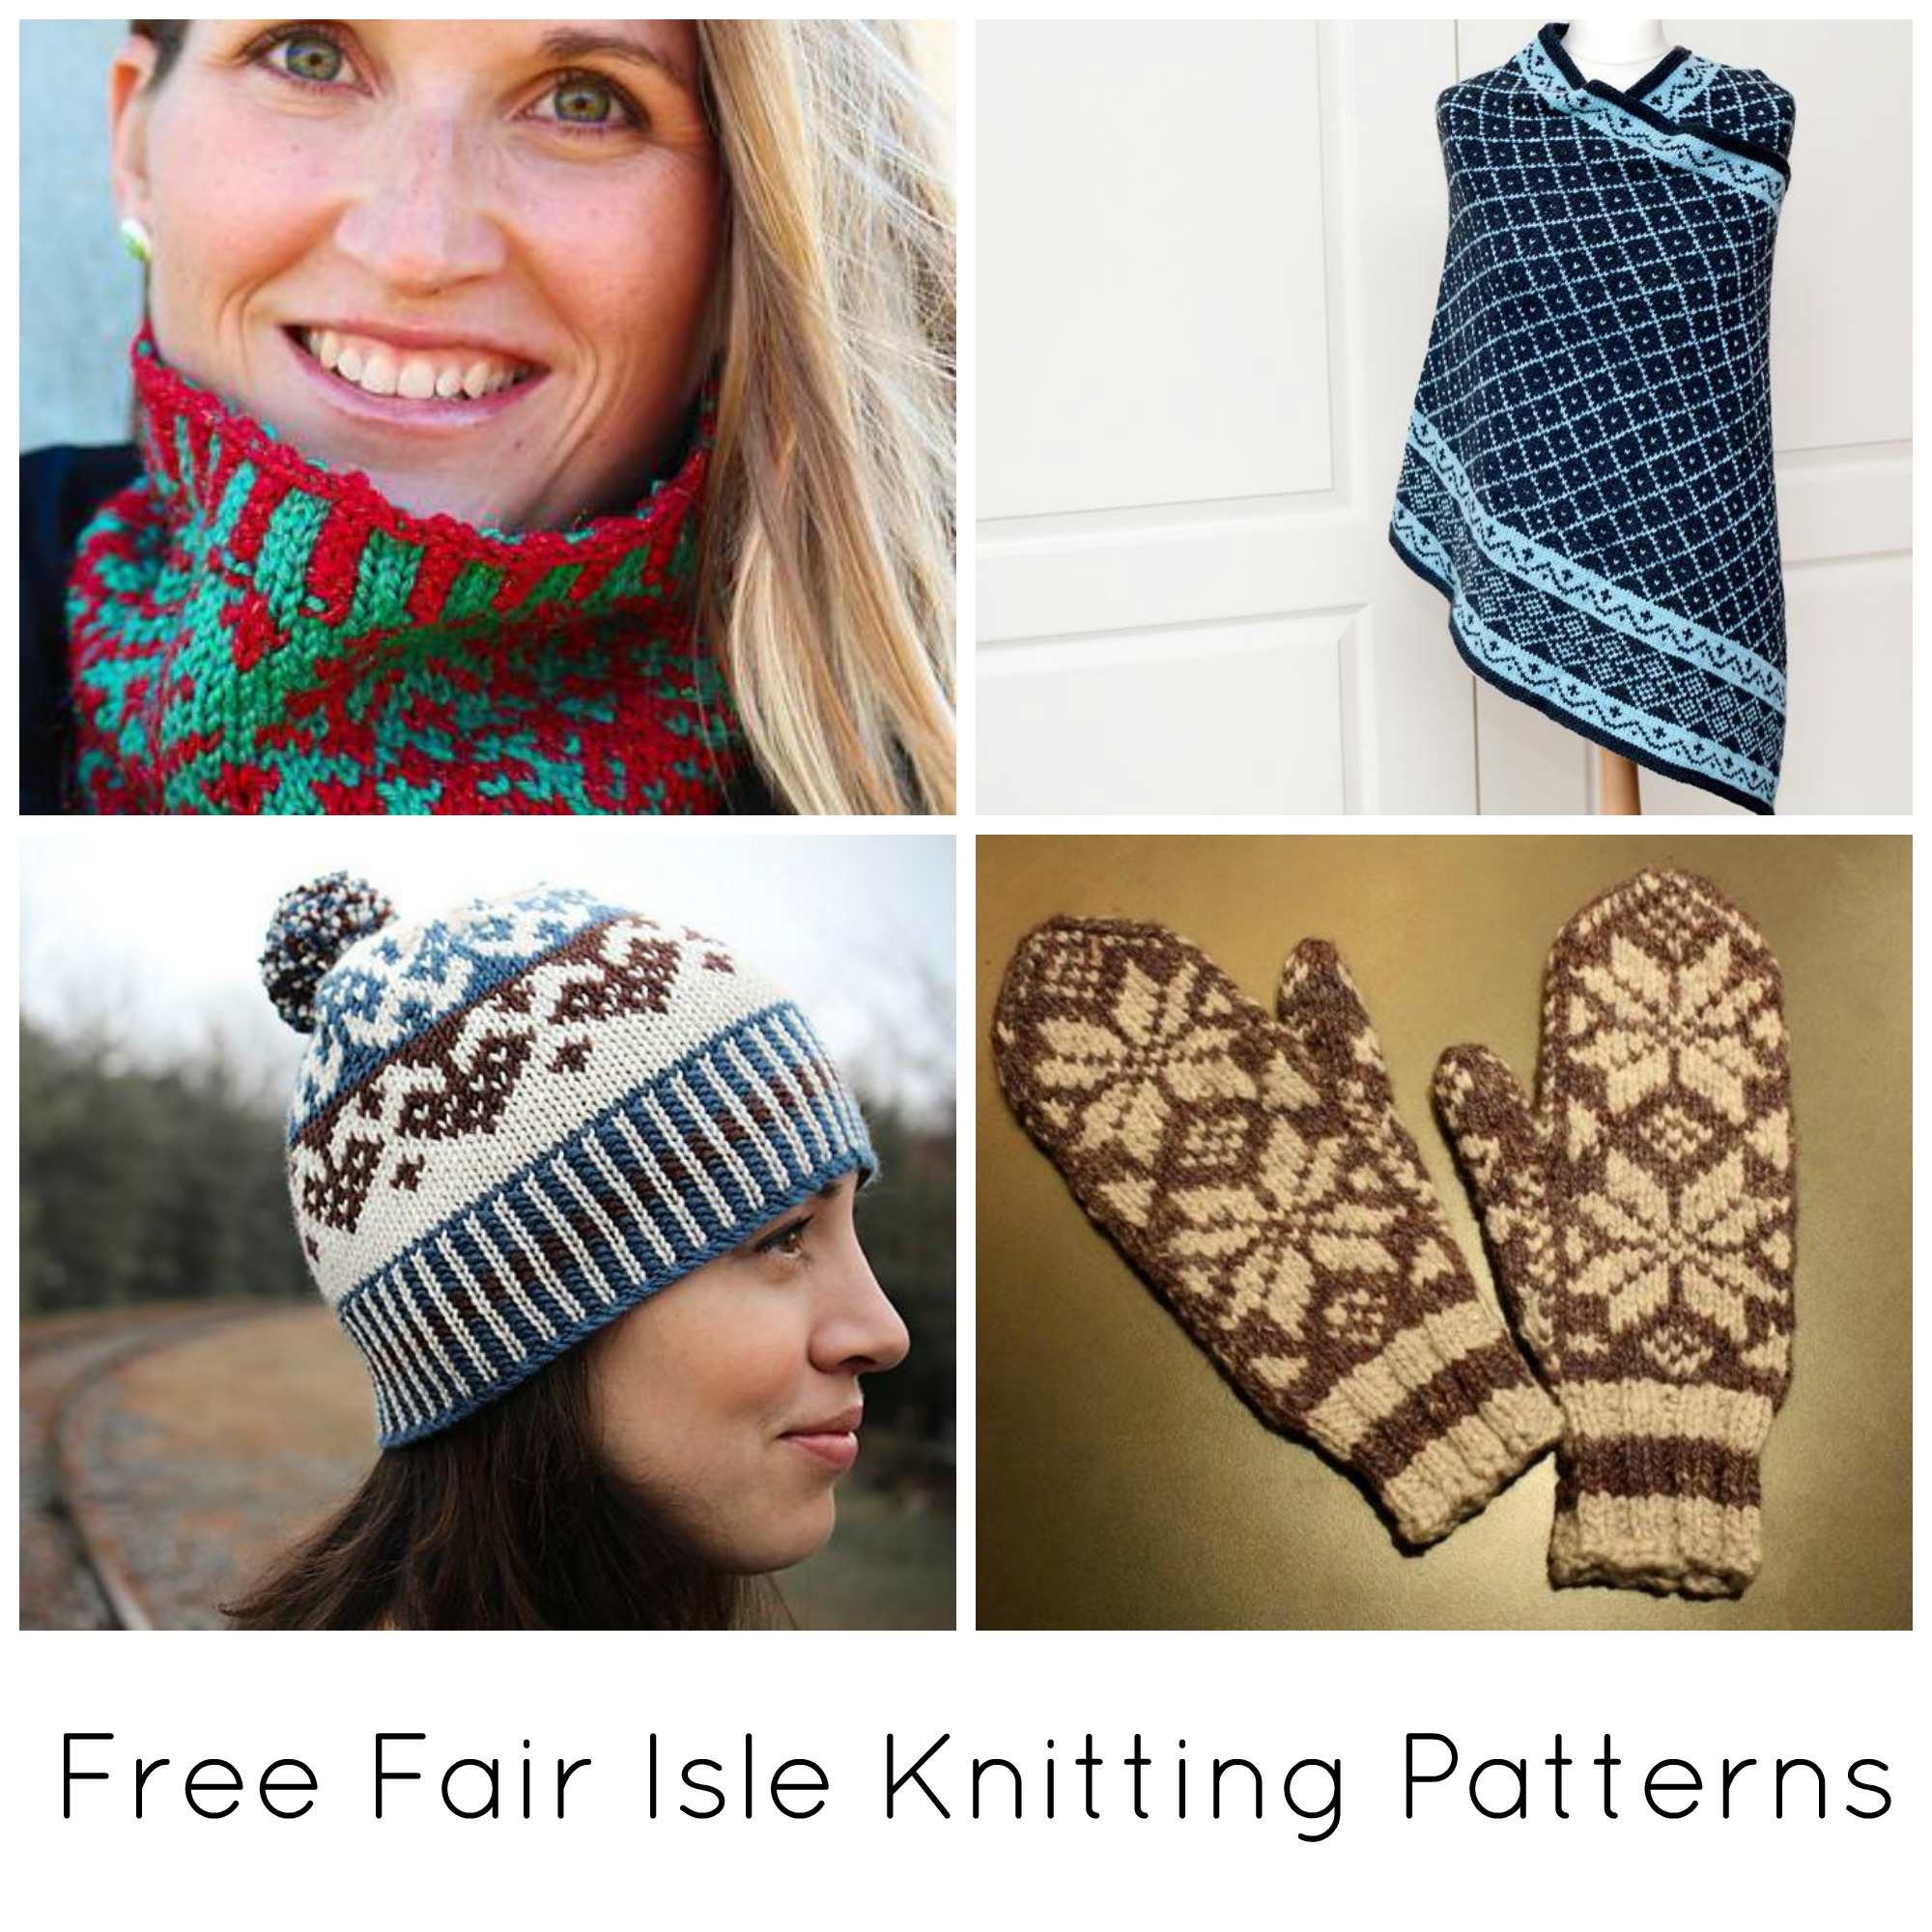 Colorwork Knitting Patterns Free 10 Free Fair Isle Knitting Patterns On Craftsy